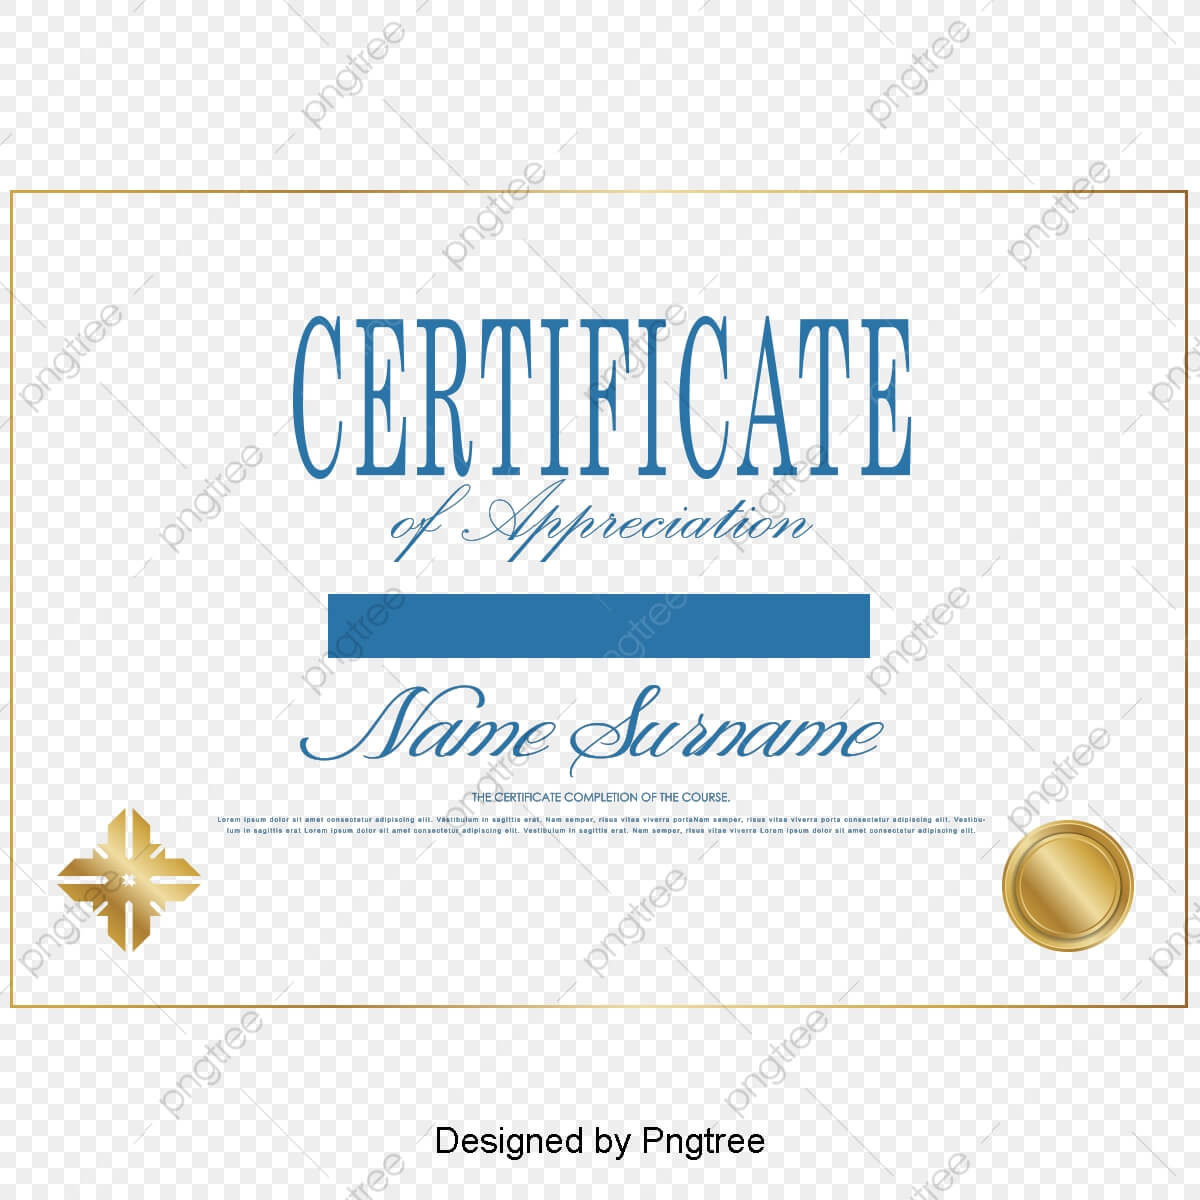 Simple Certificate Certificates Design Vector Material In Update Certificates That Use Certificate Templates